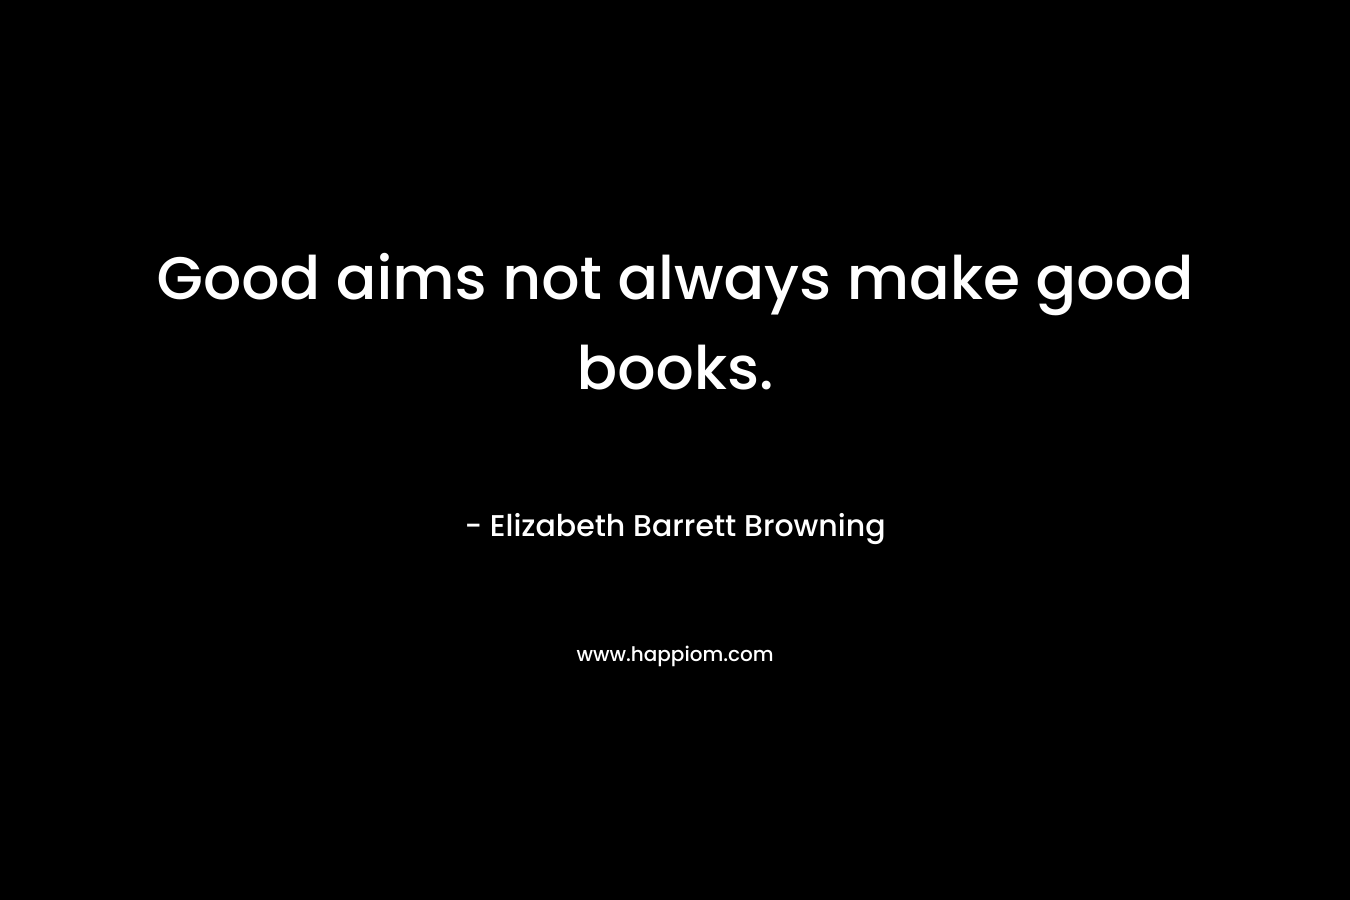 Good aims not always make good books. – Elizabeth Barrett Browning